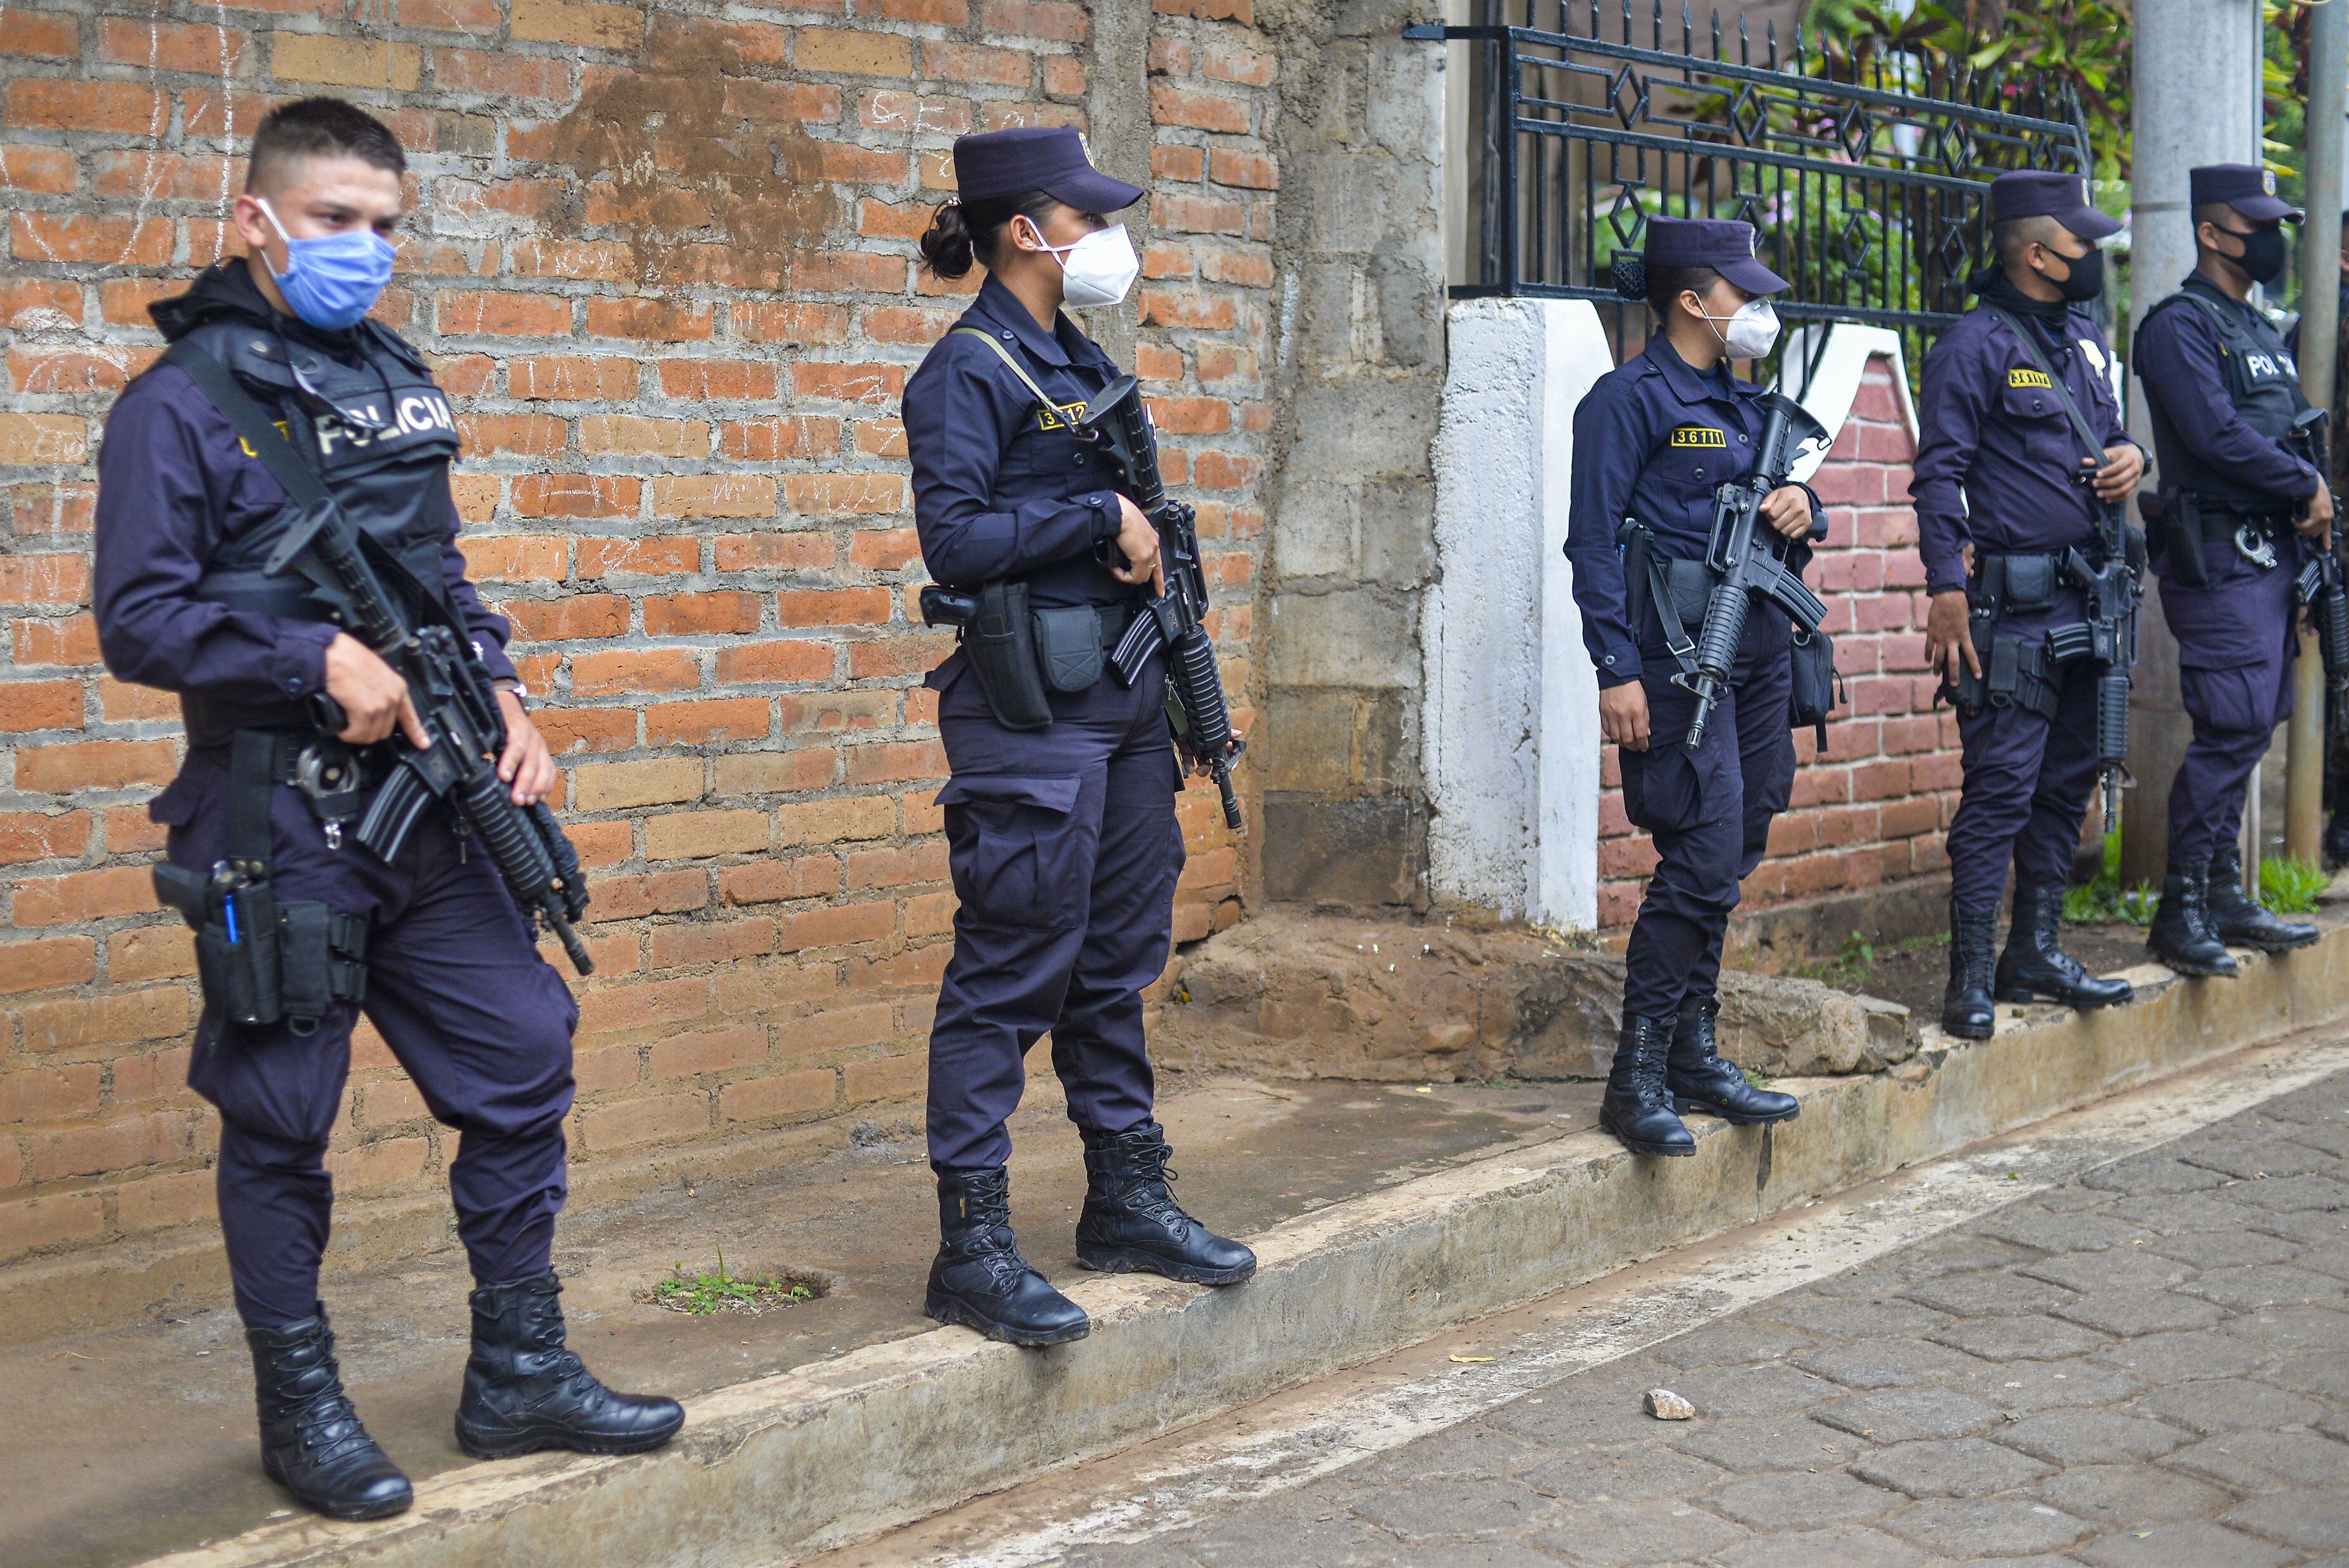  Agentes de la Policía Nacional de El Salvador. CAMILO FREEDMAN / ZUMA PRESS / CONTACTOPHOTO
